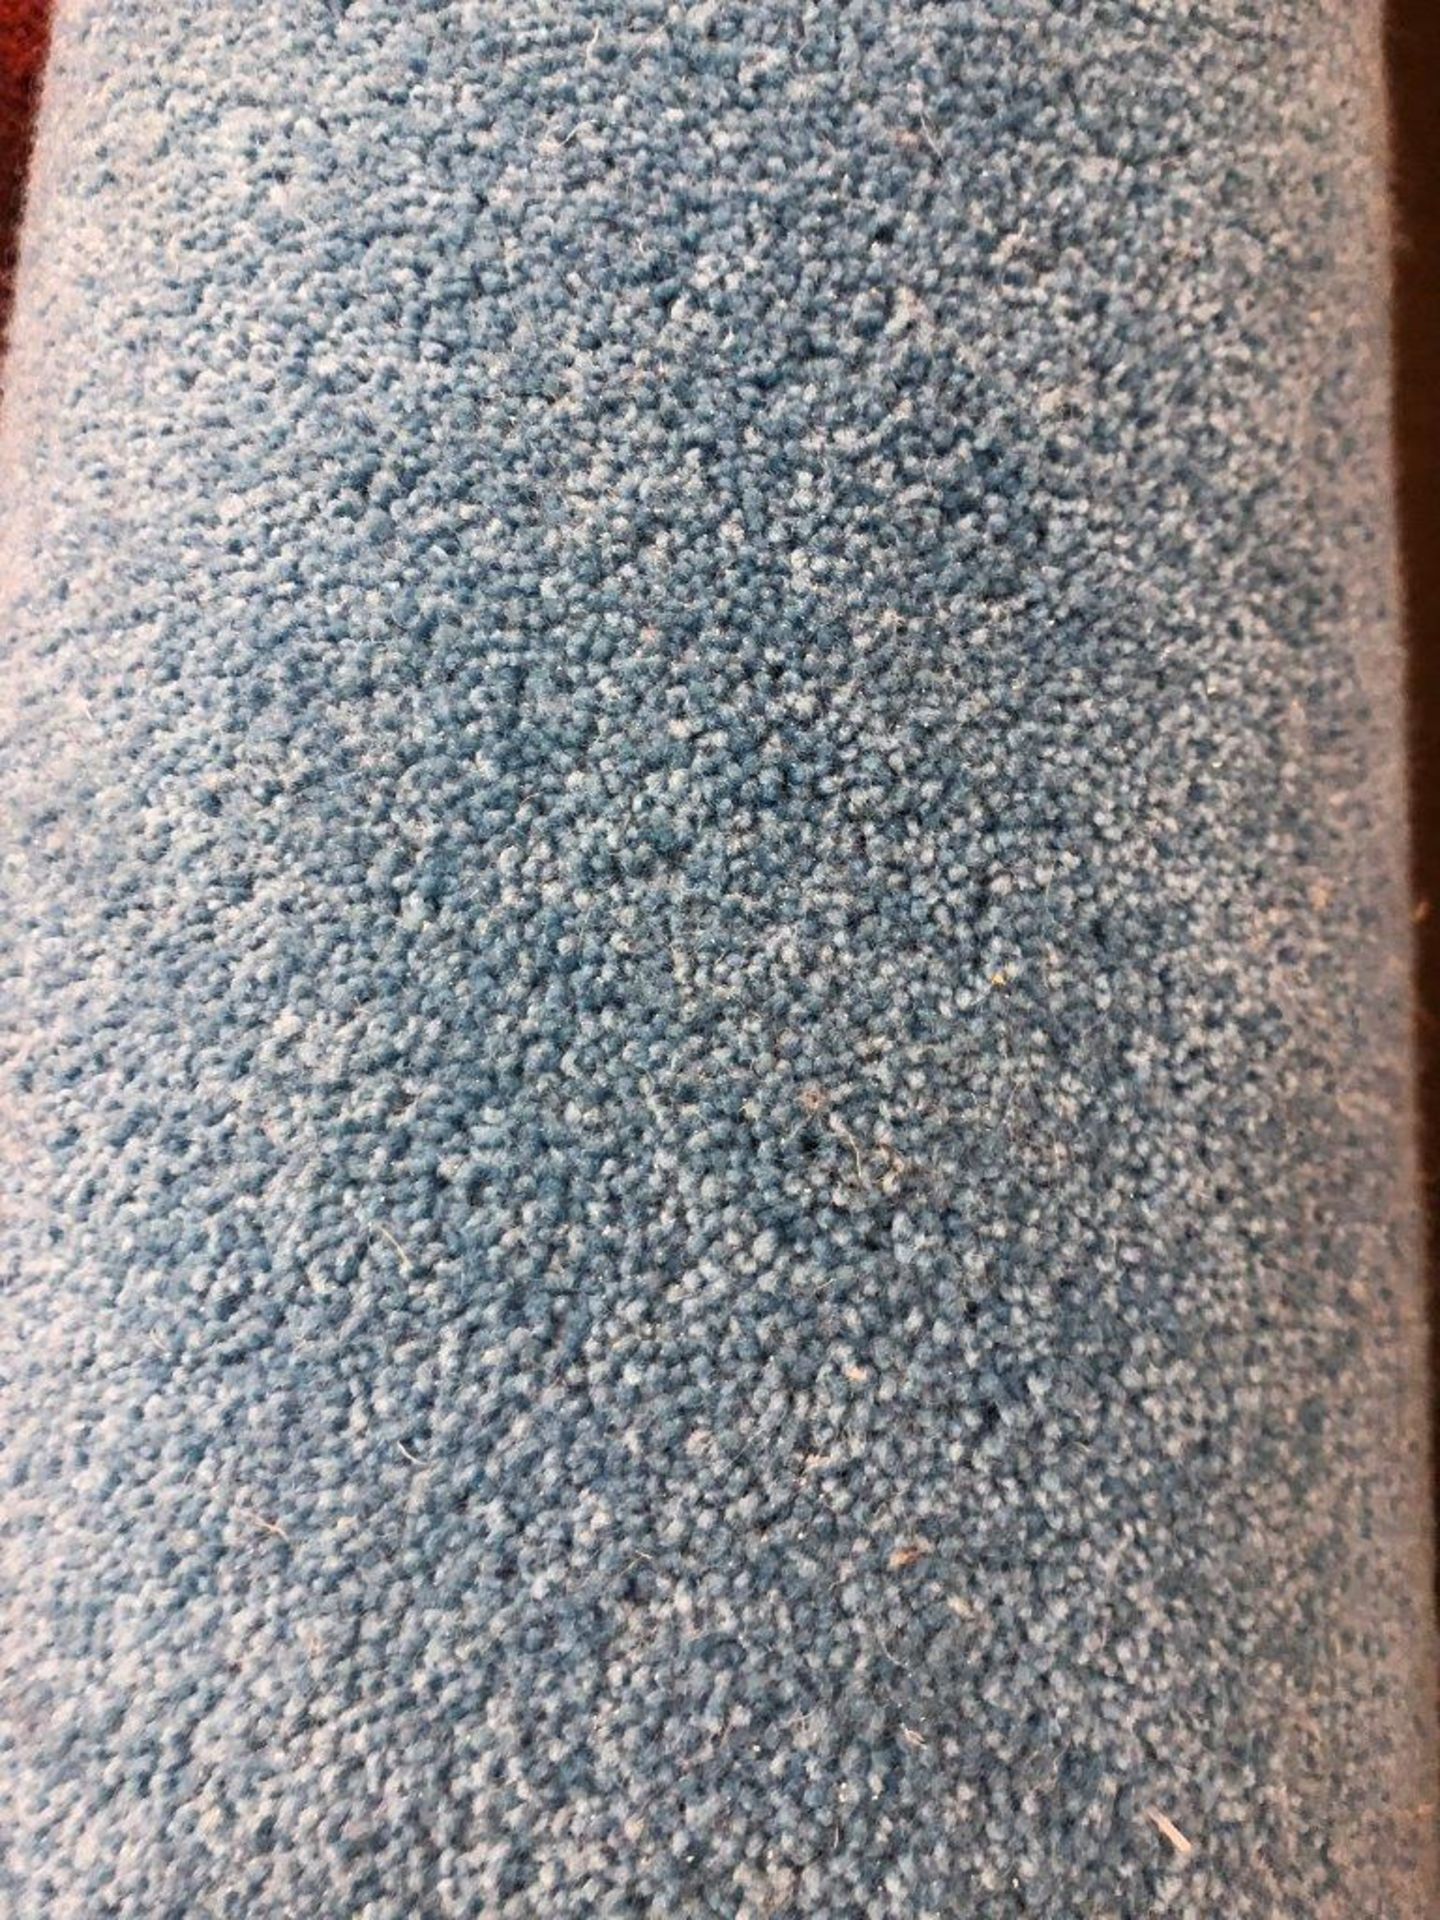 1 x Ryalux Carpet End Roll - Blue 3.9x2.9m2 - Image 3 of 3